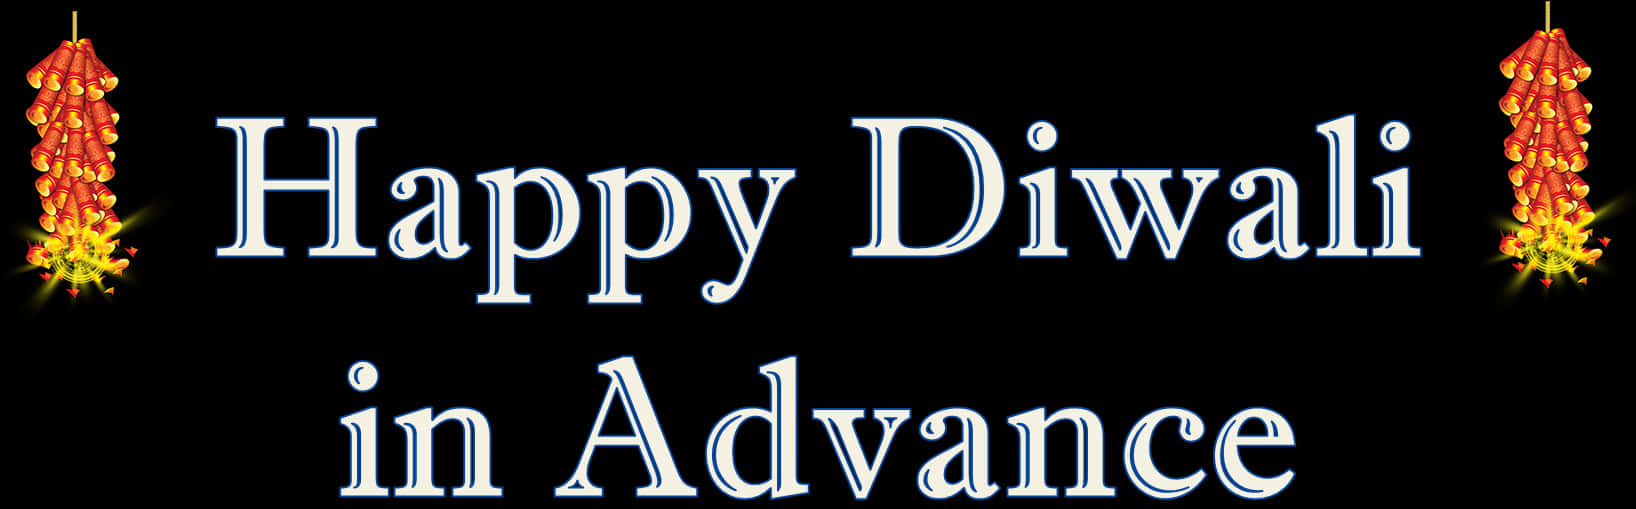 Happy Diwaliin Advance Banner PNG